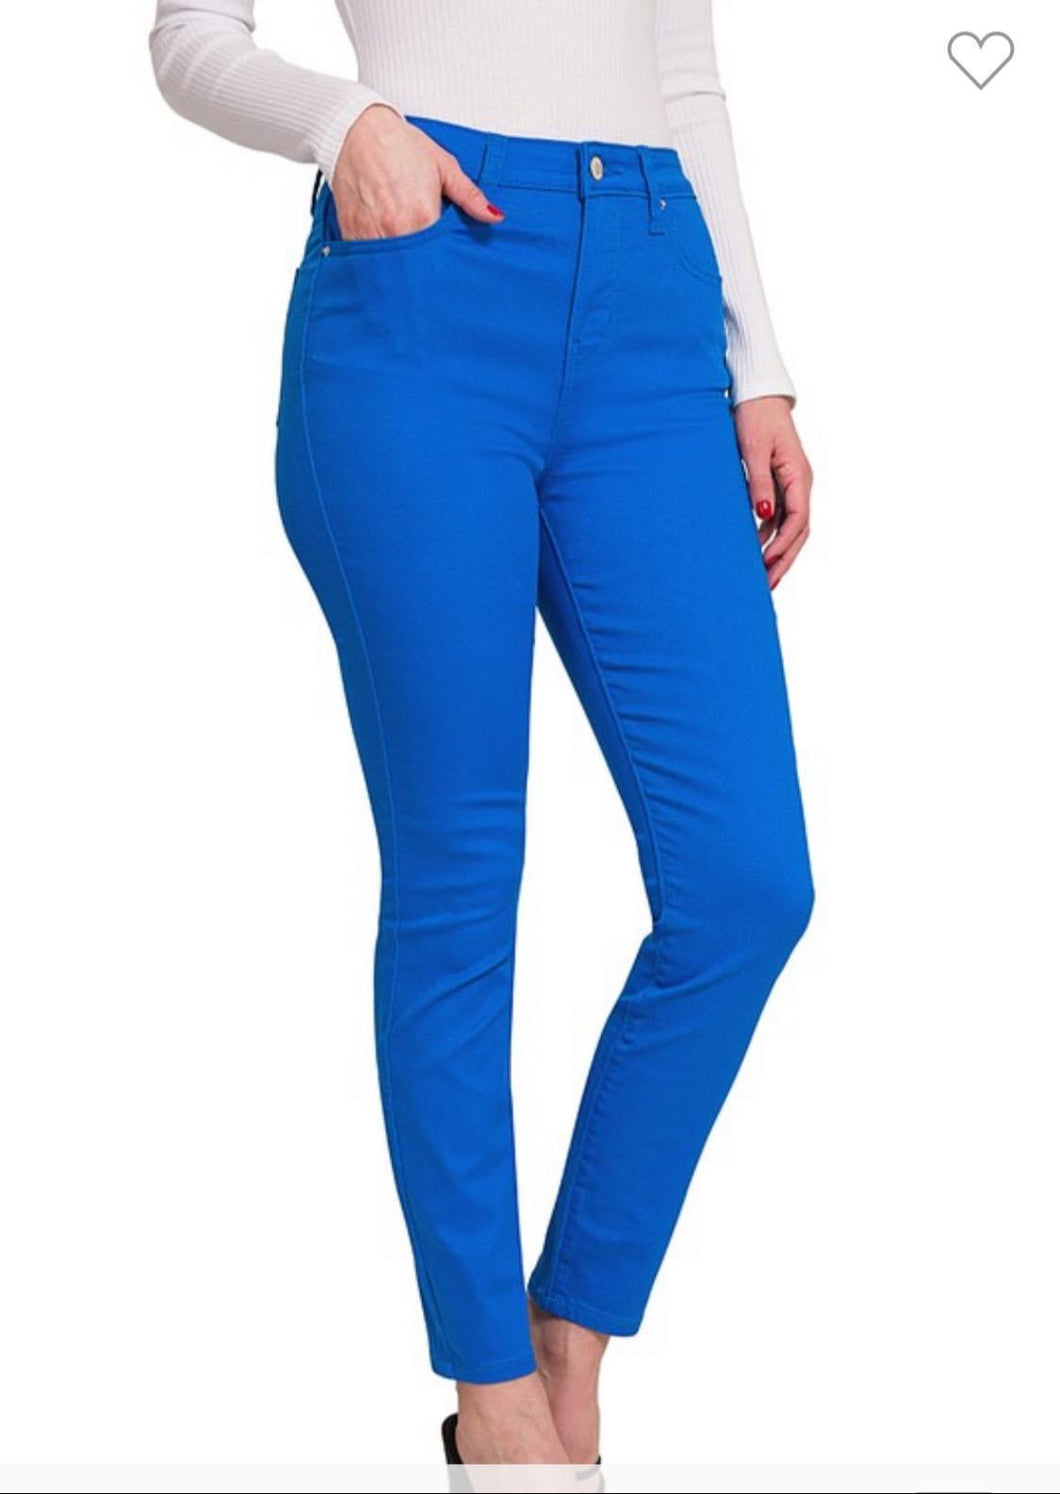 Zenana Ocean Blue Colored Jeans